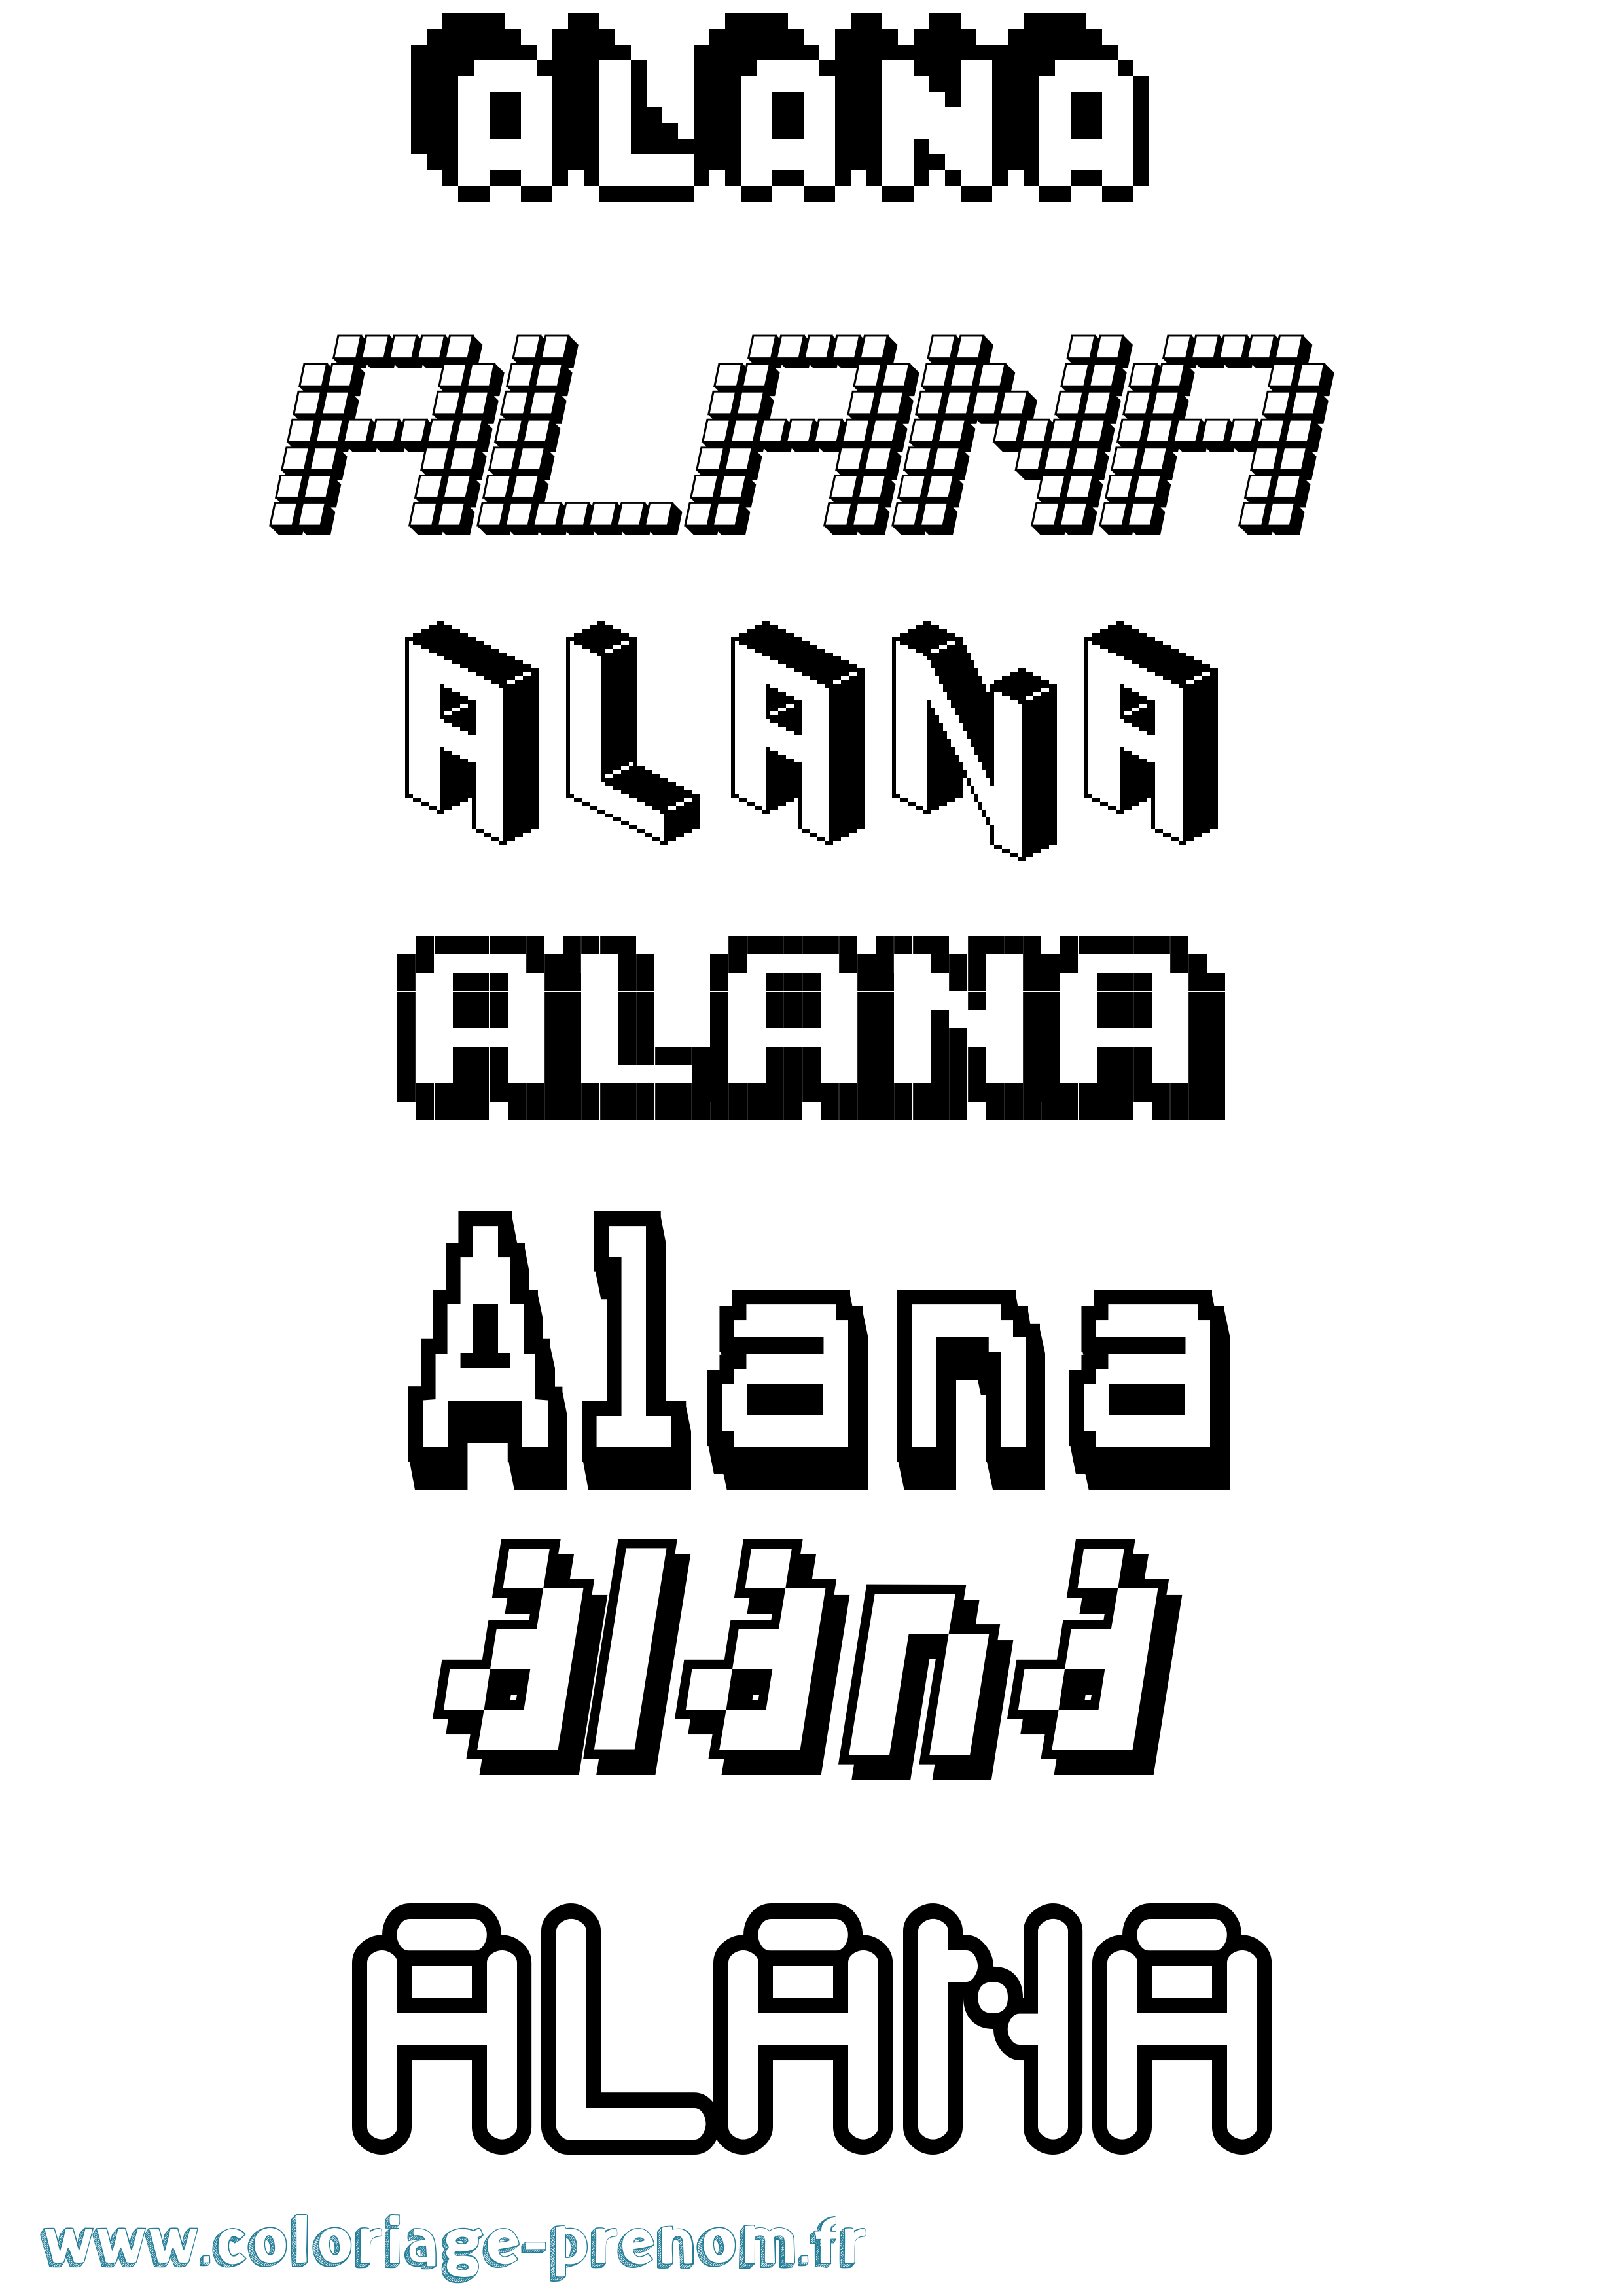 Coloriage prénom Alana Pixel